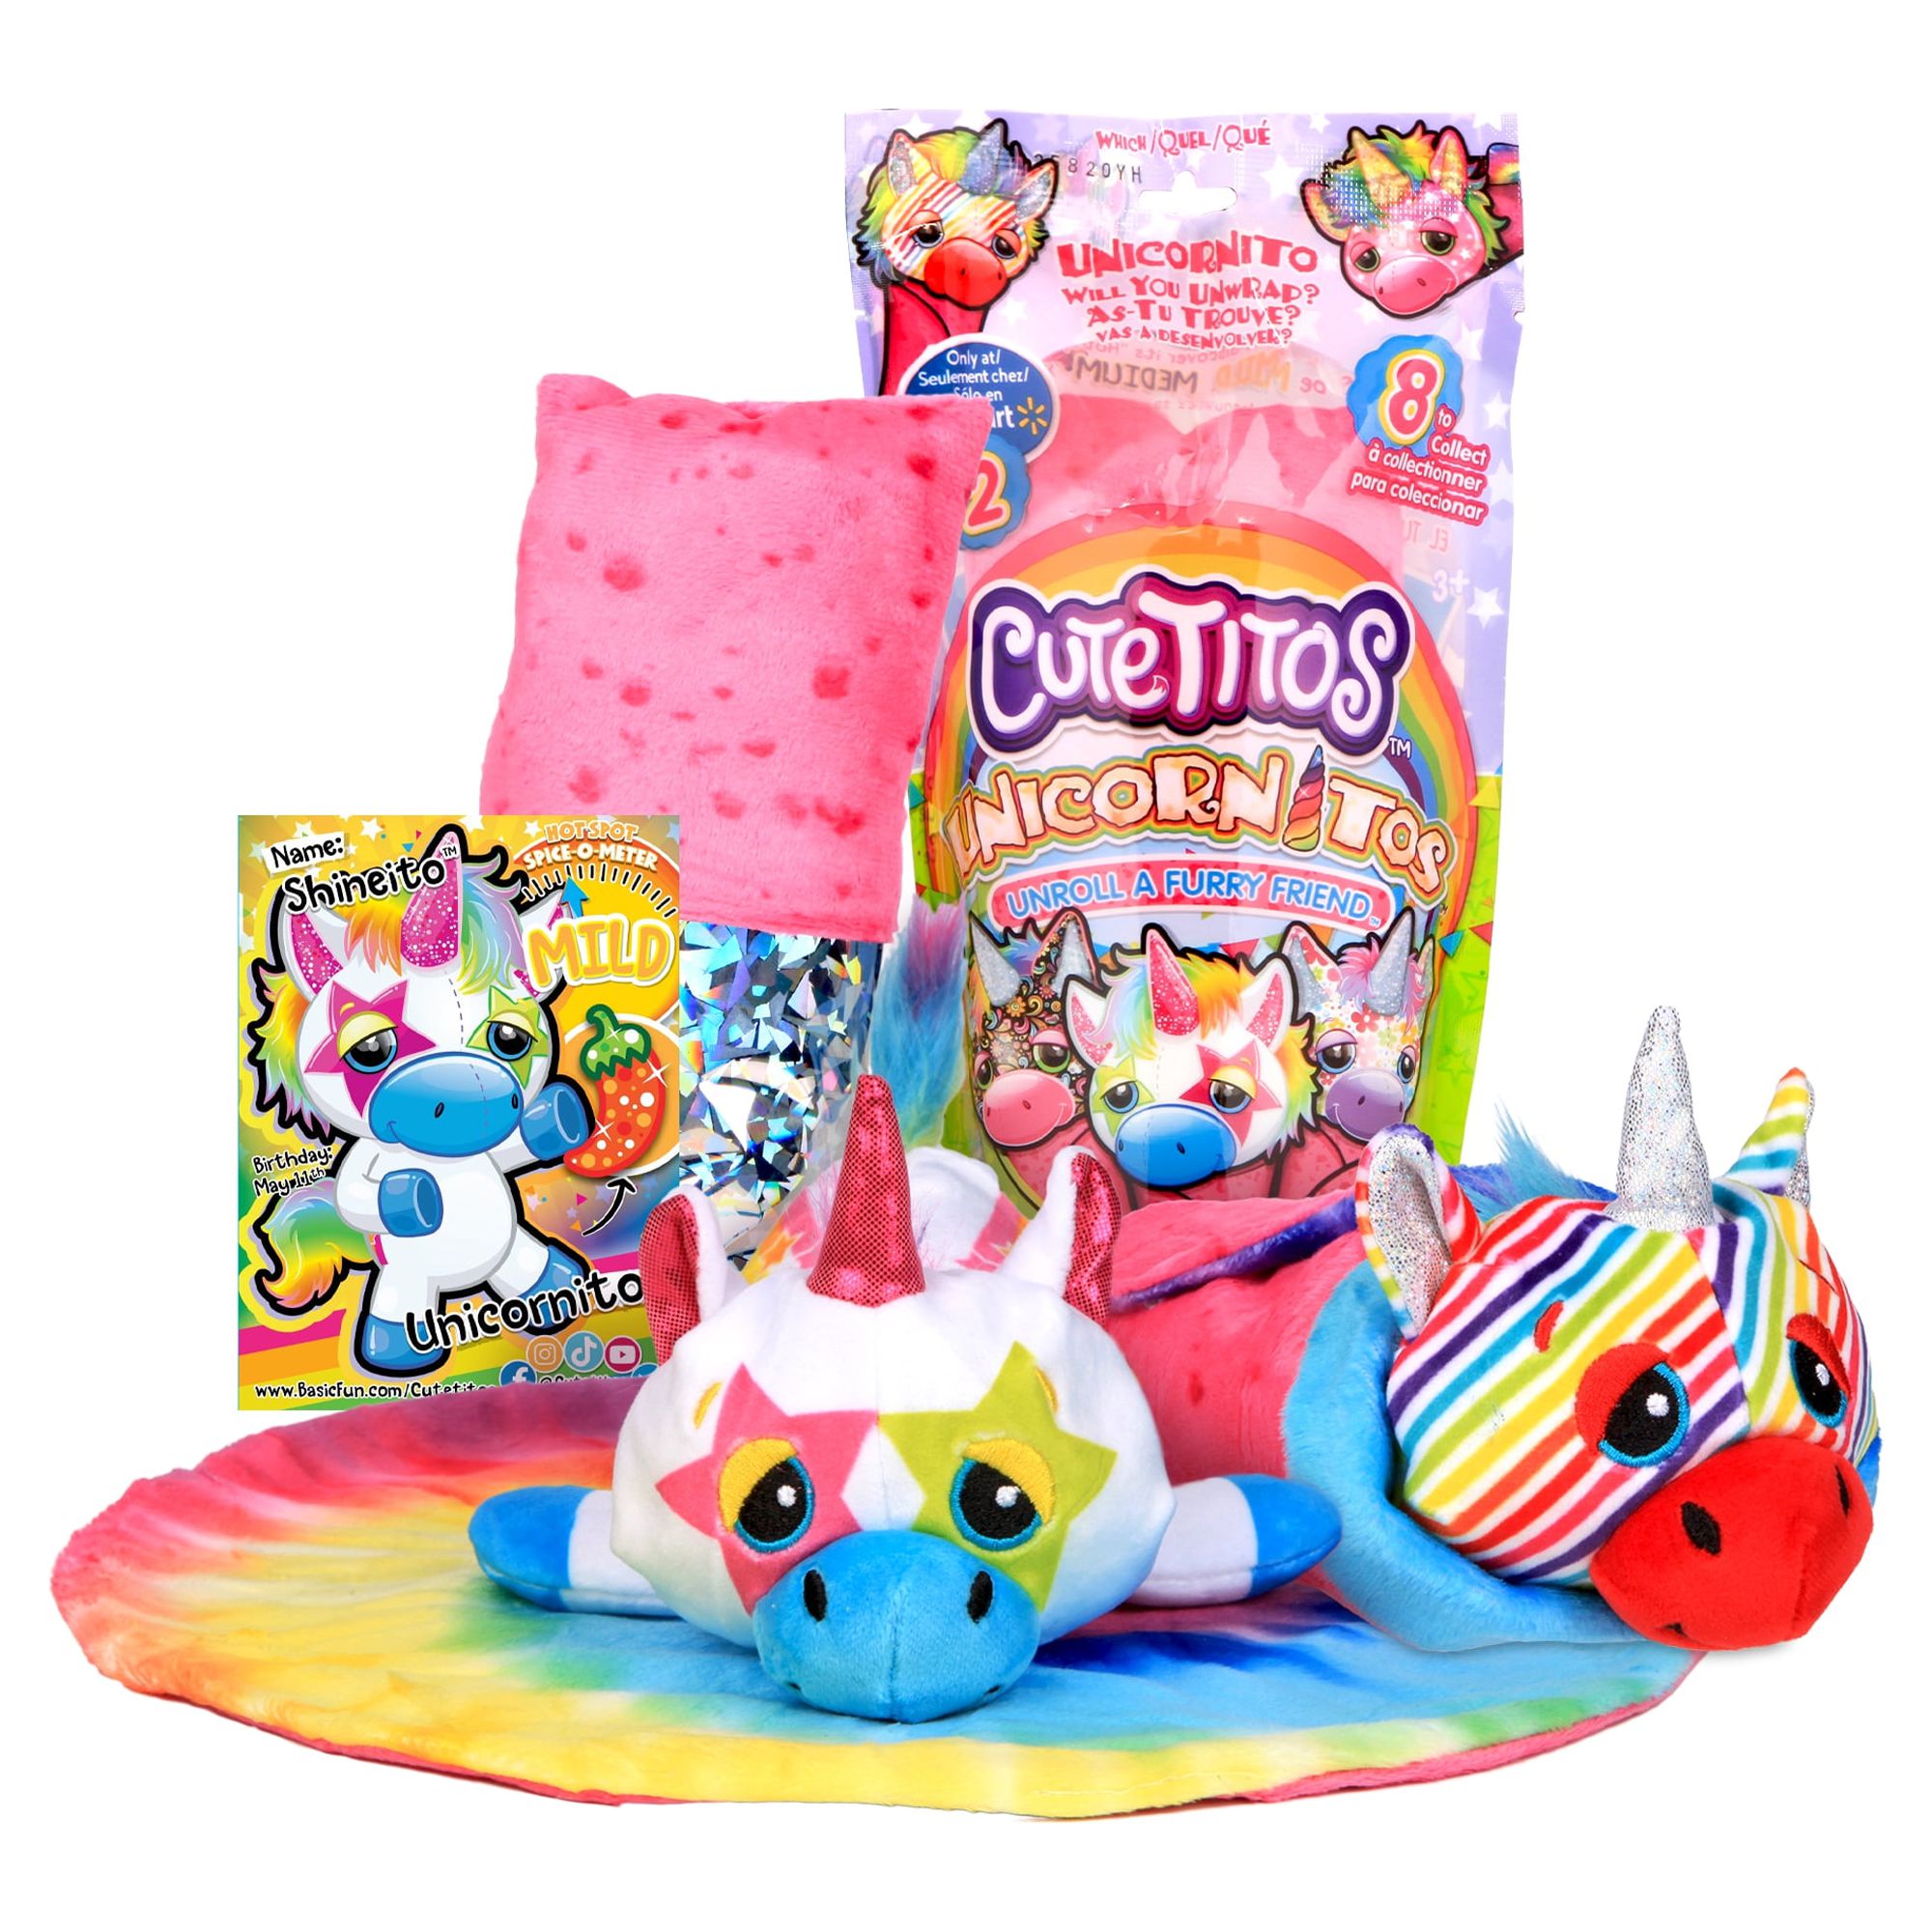 Cutetitos Unicornitos - Surprise Stuffed Animals - Collectible Plush Unicorns (Styles May Vary) - image 1 of 10